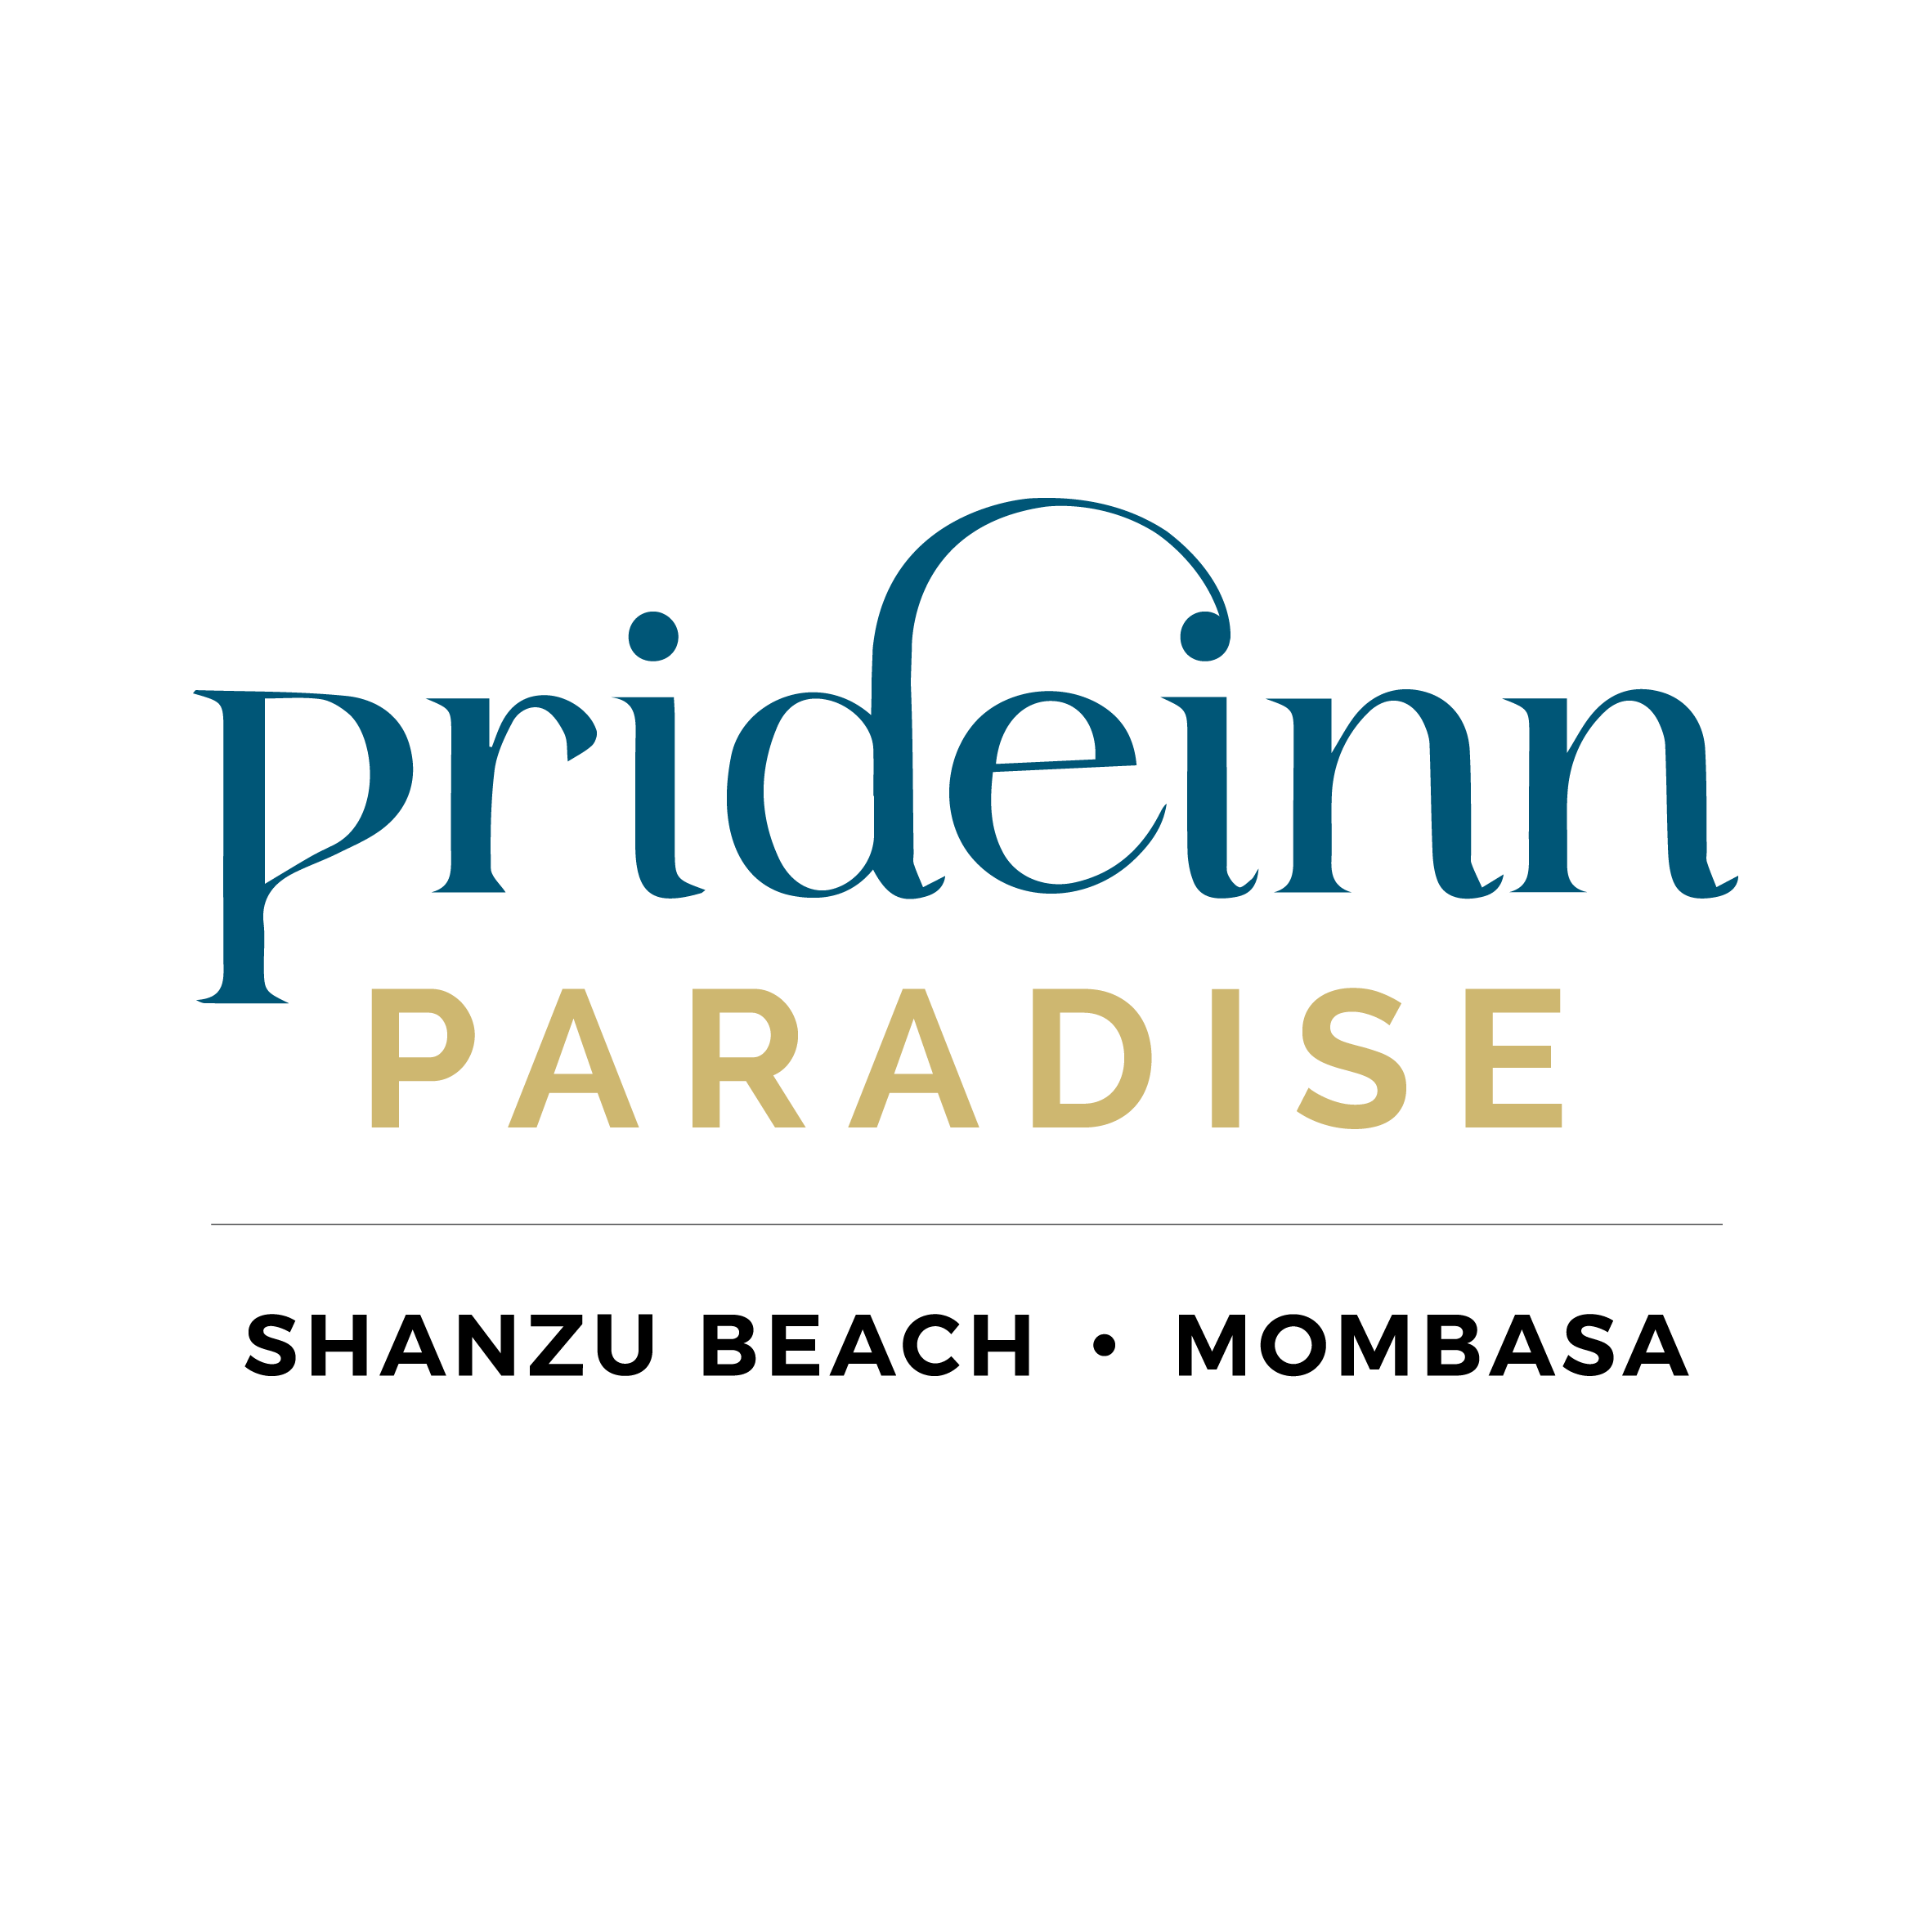 PrideInn Paradise,hotels in mombasa